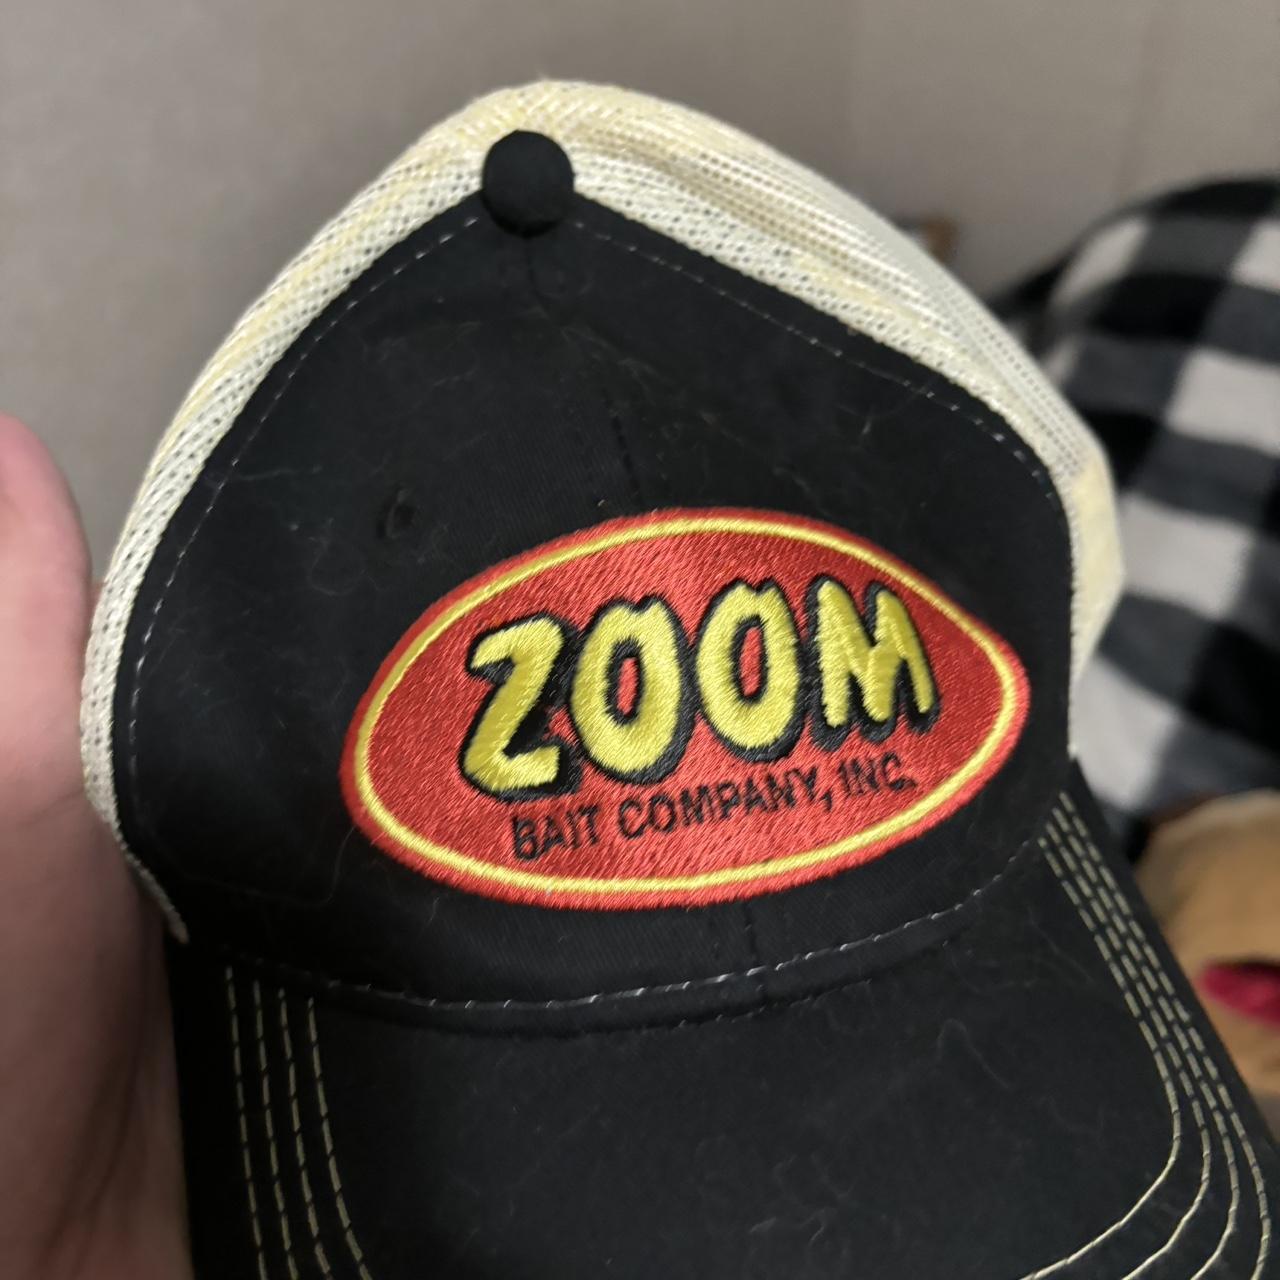 Zoom bait company hat - Depop